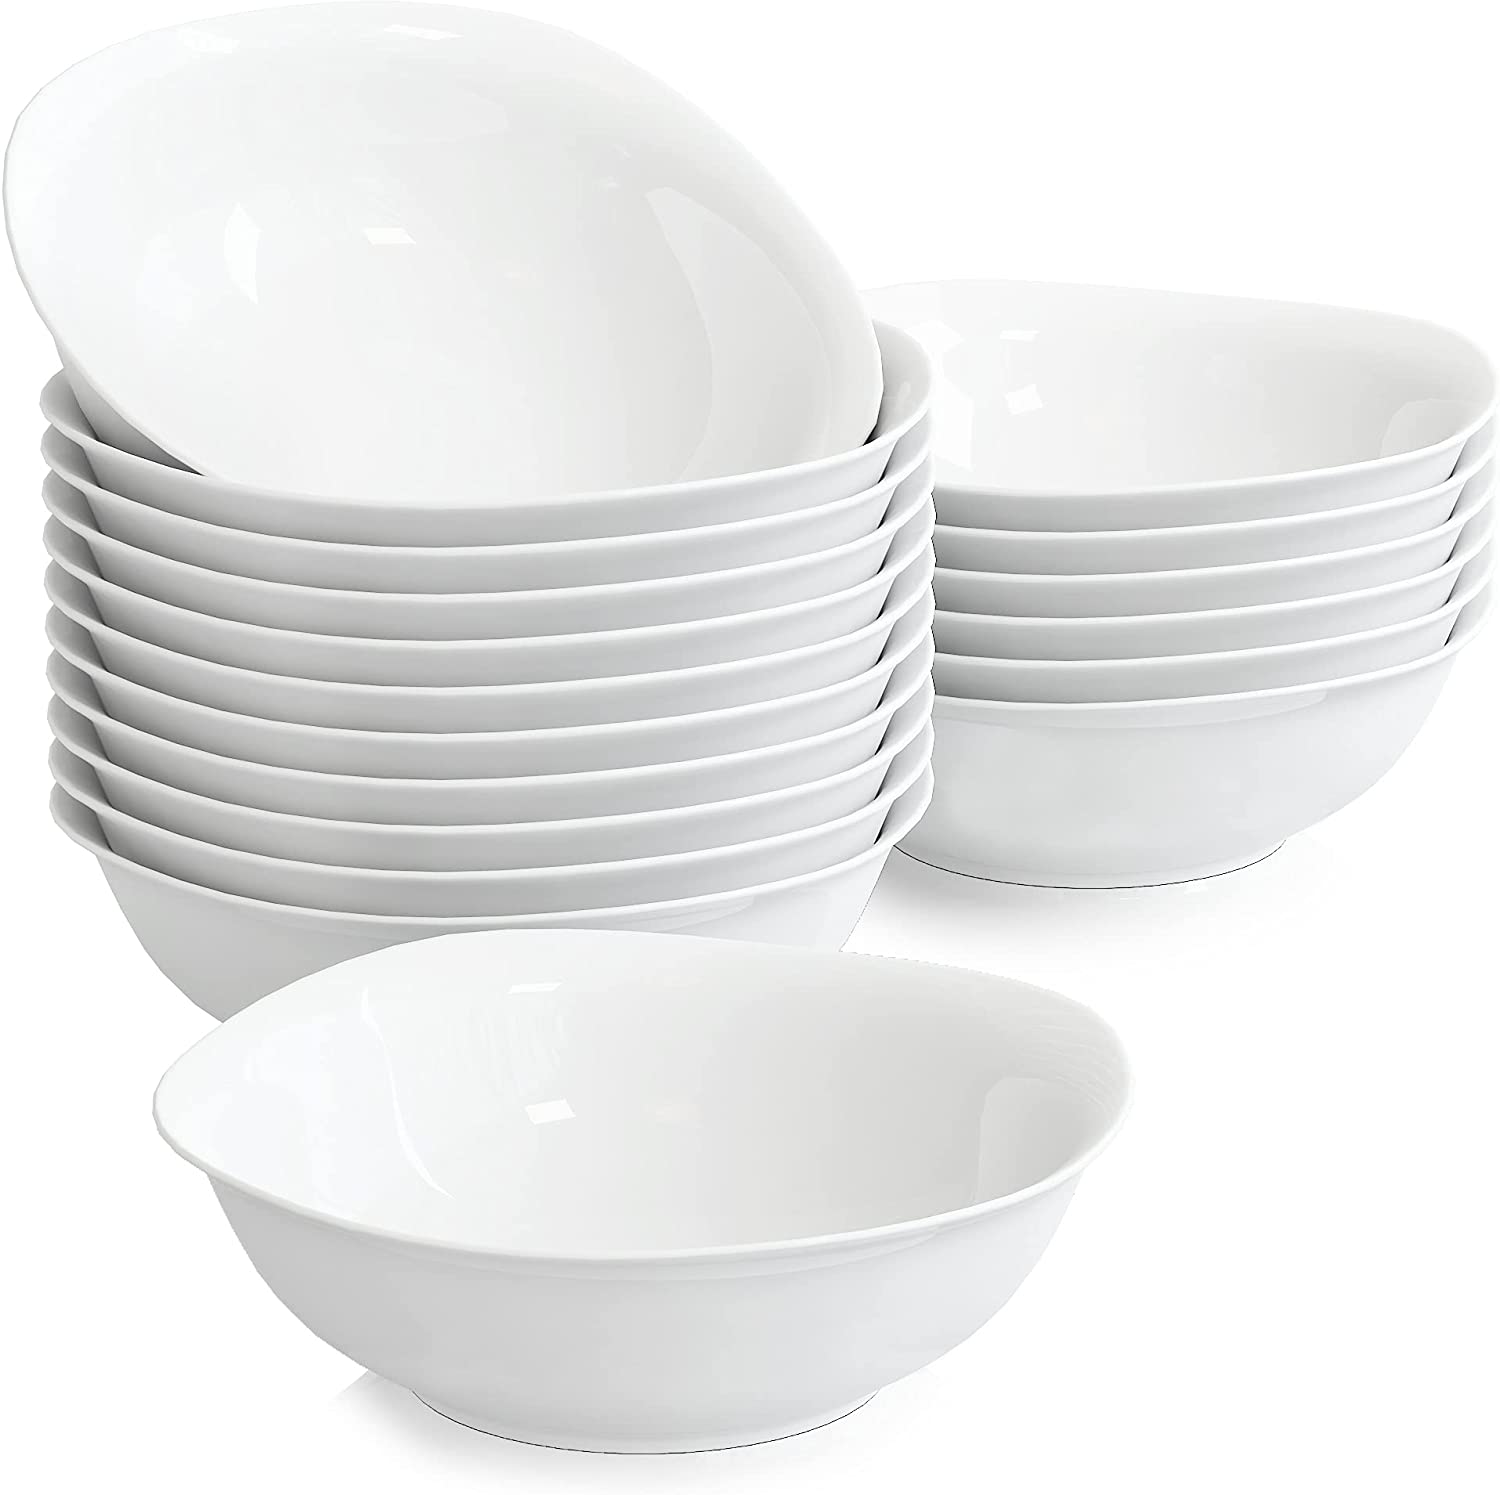 \'Custom Malacasa Elisa, Set of 18 Creamy White Porcelain Cereal Bowl 6.7 17x17x5 cm Salad Serving Dessert Bowls for 18 People